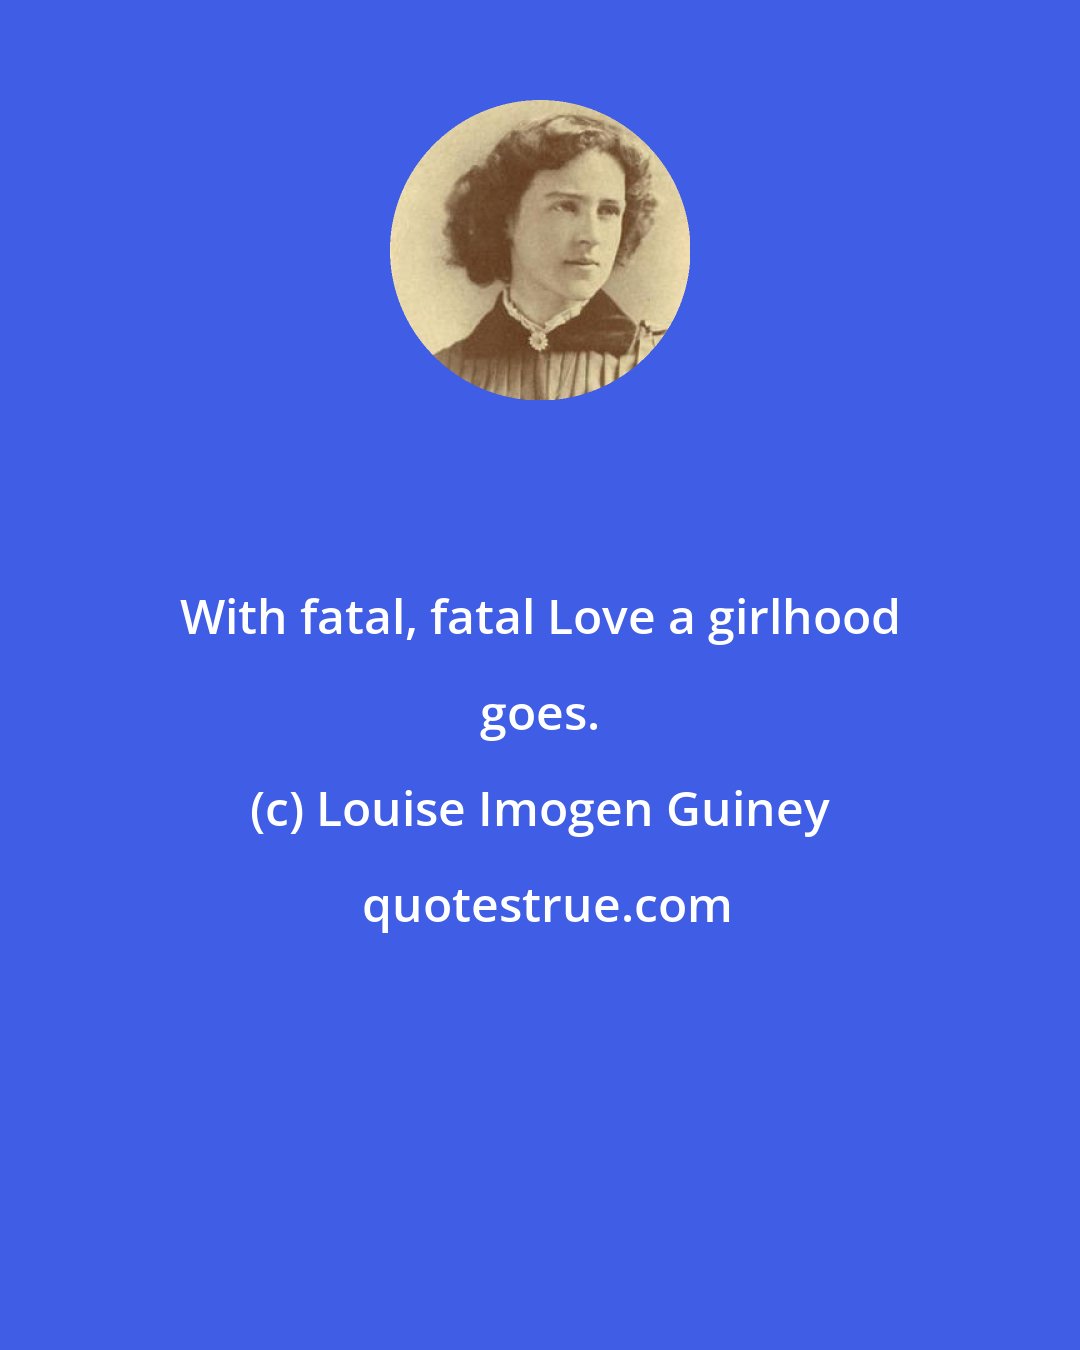 Louise Imogen Guiney: With fatal, fatal Love a girlhood goes.